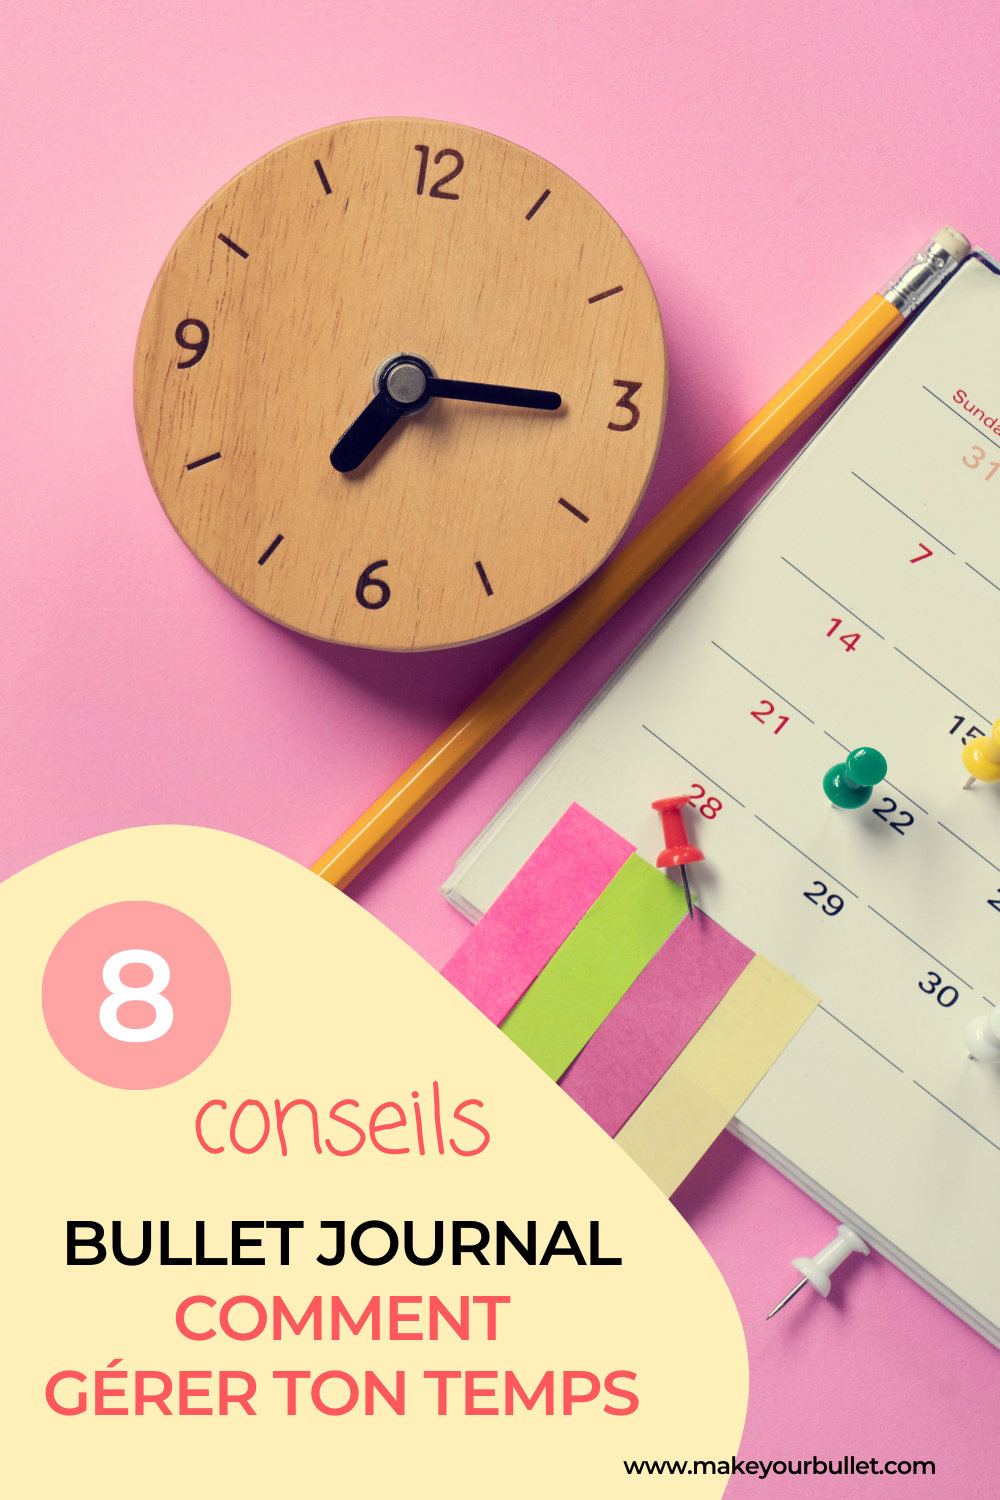 8-conseils-gerer-temps-bullet-journal-article-organisation